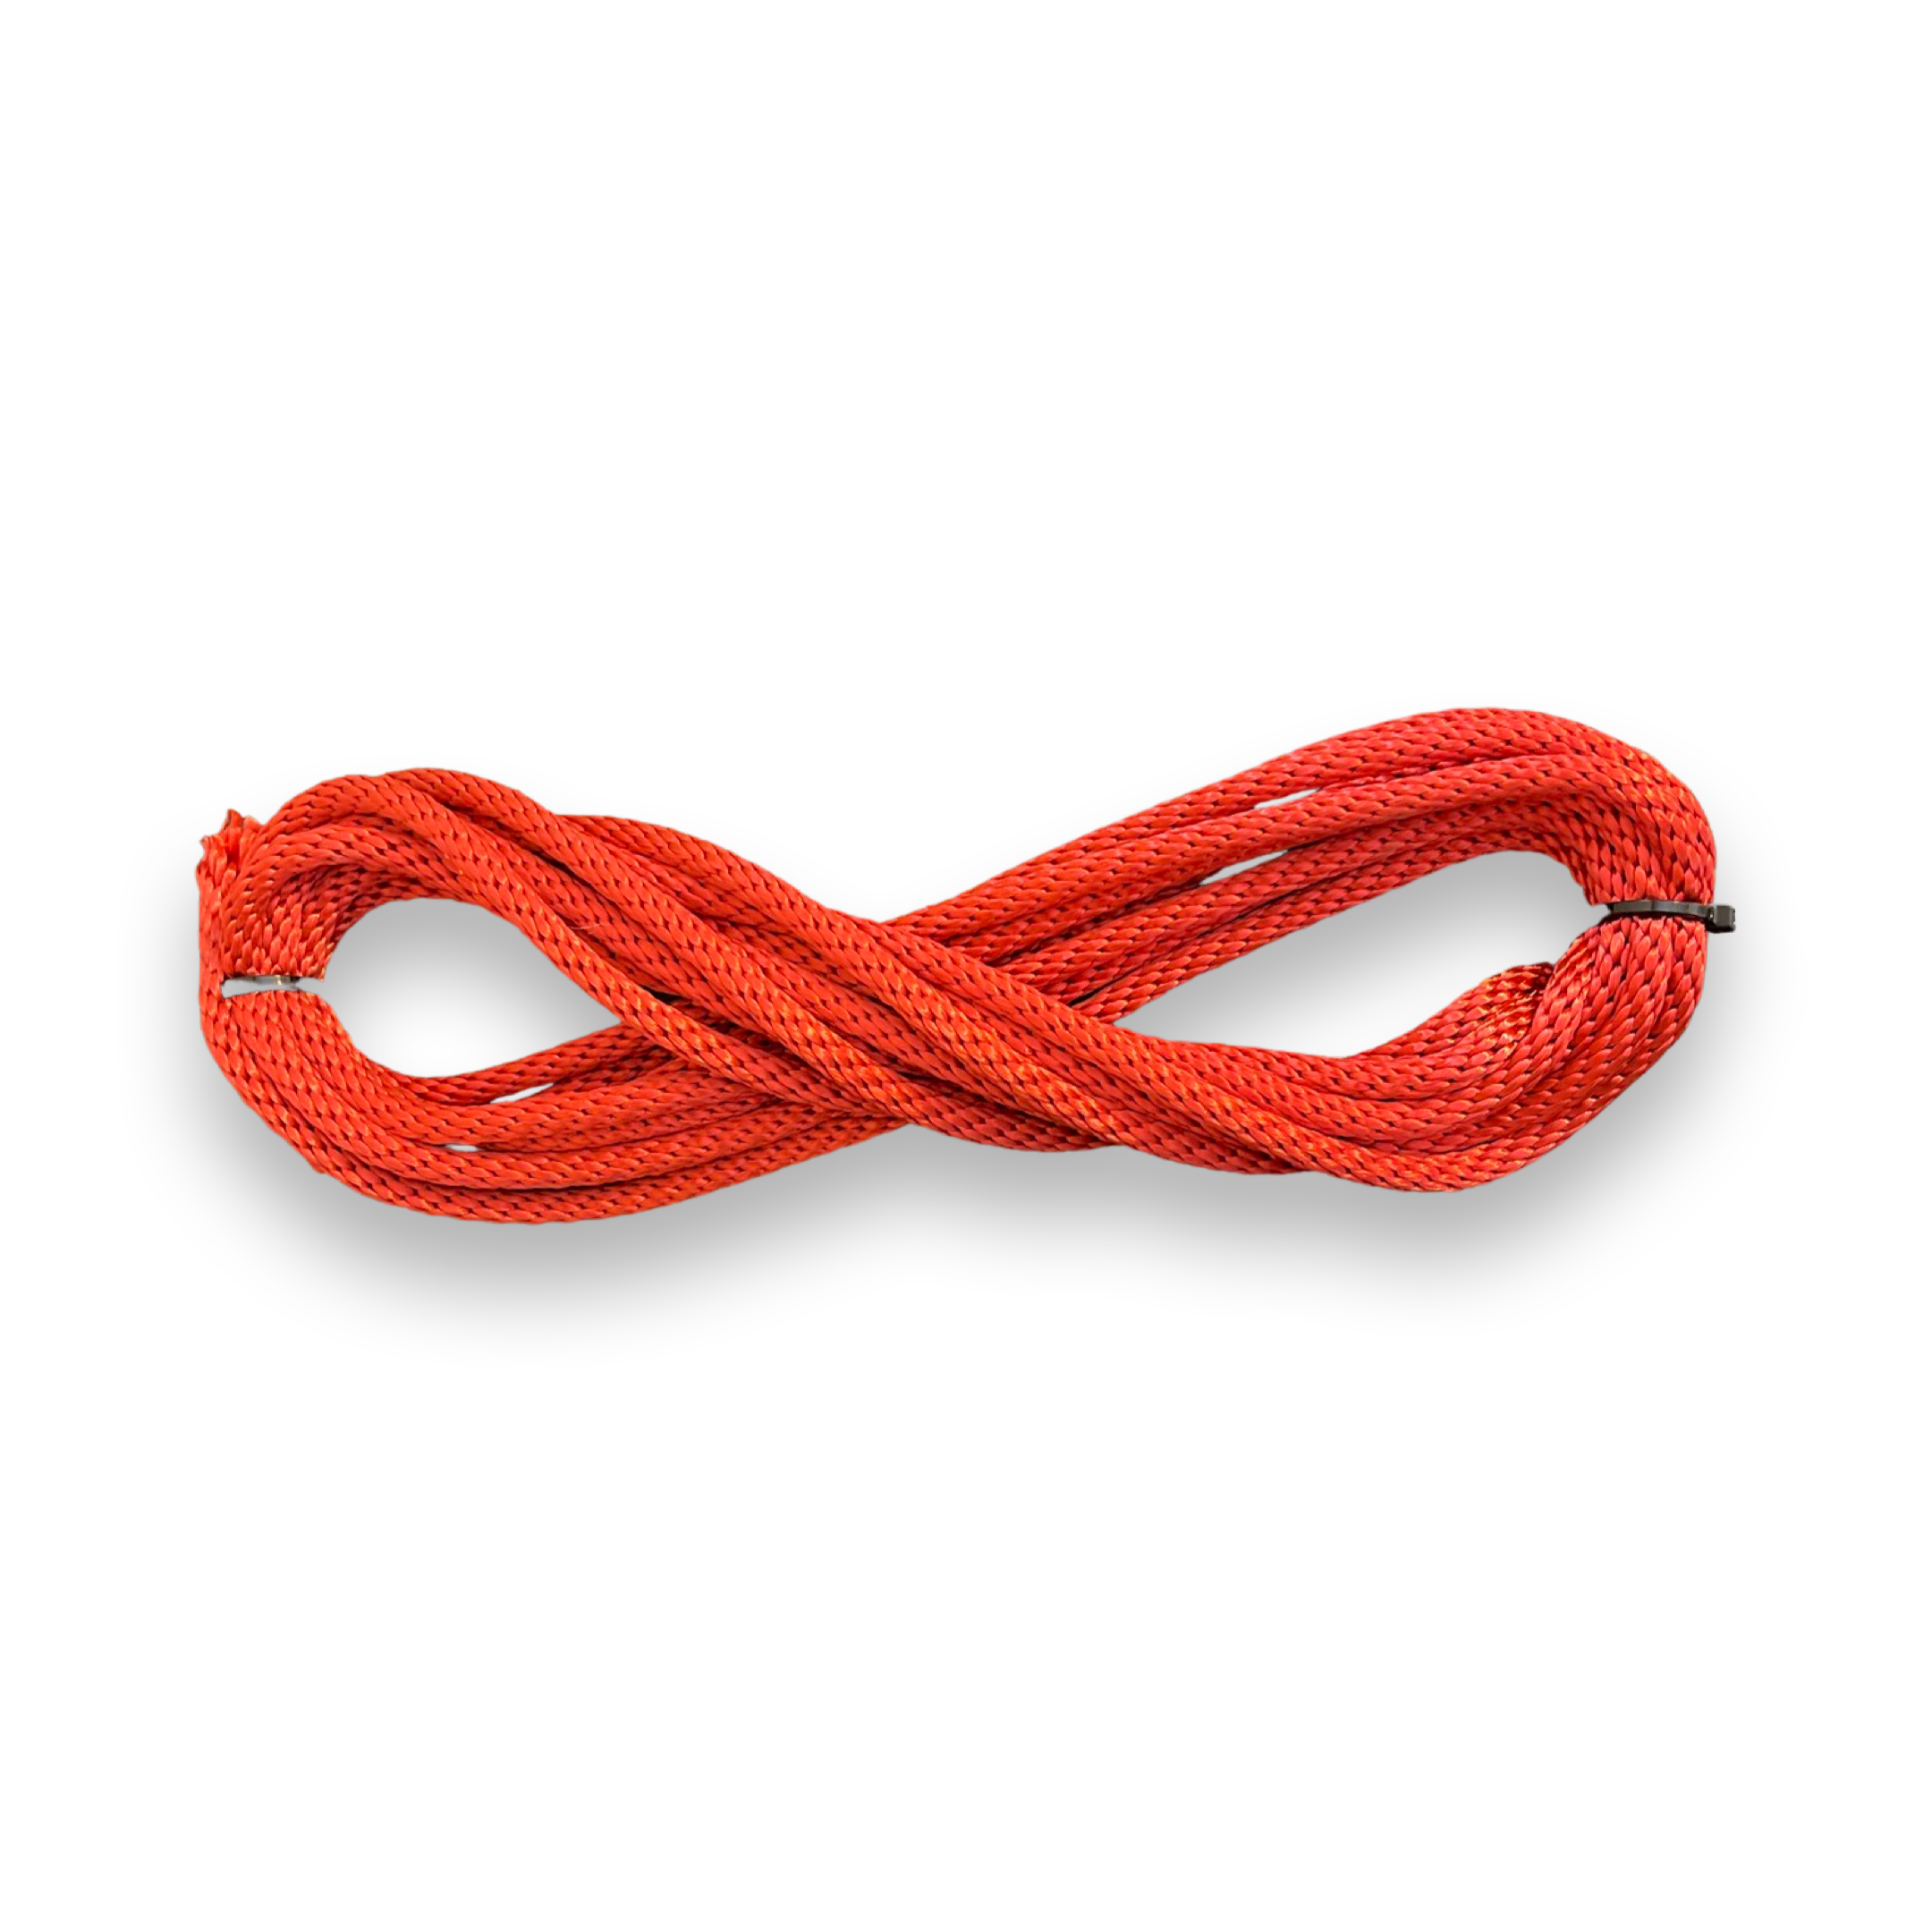 intermediate shibari rope set 2x4m/13,14ft + 4x8m/26,24ft